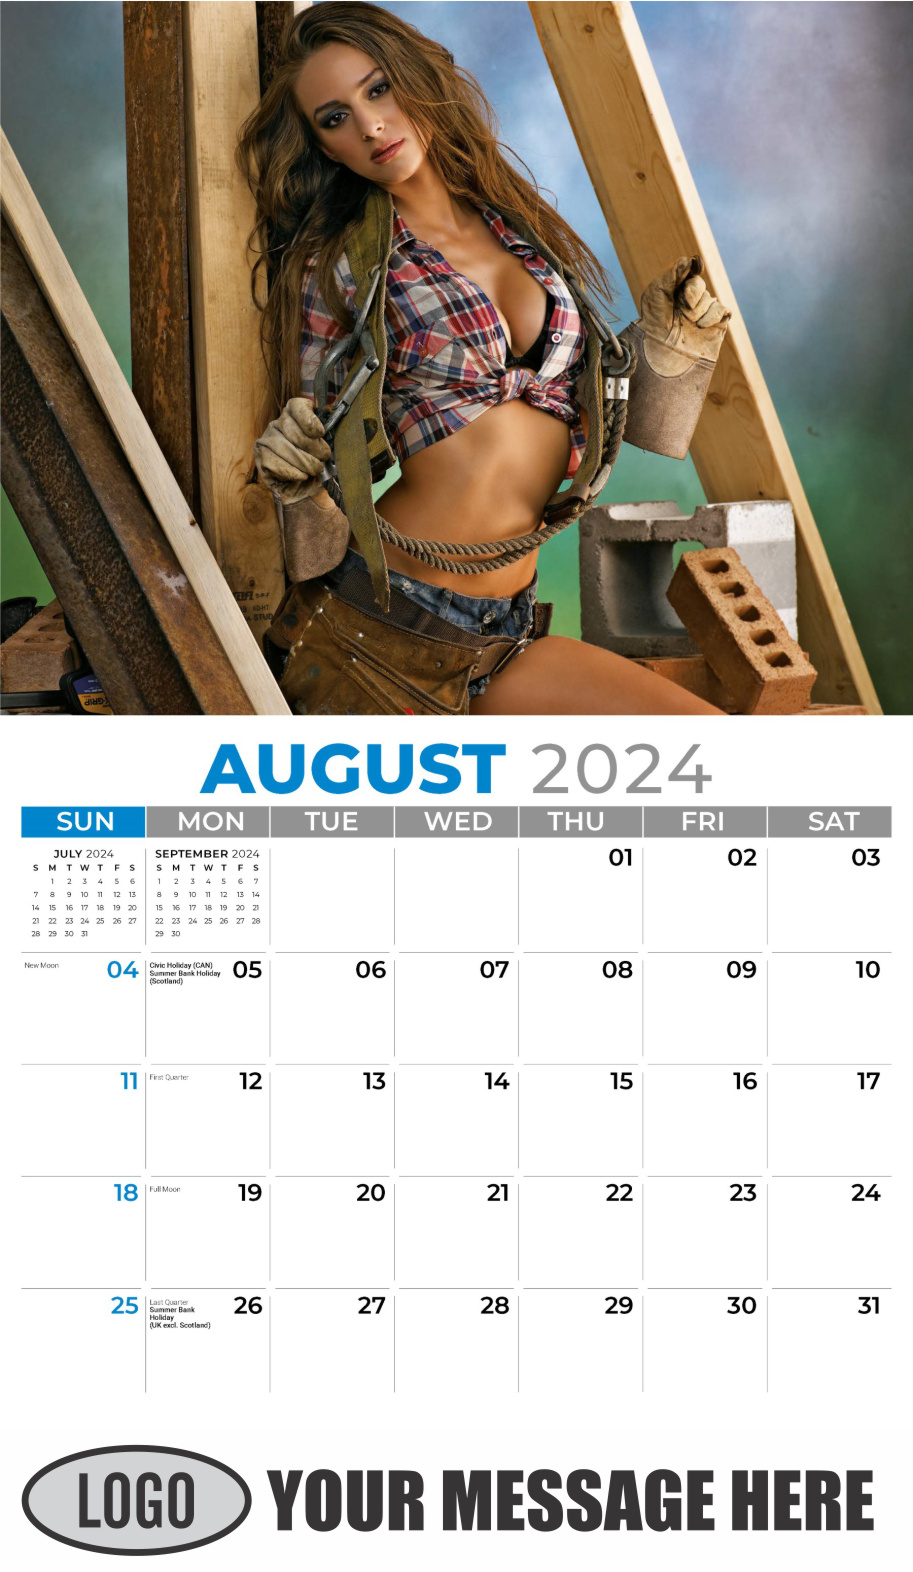 Building Bades 2024 Business Promotional Calendar - August